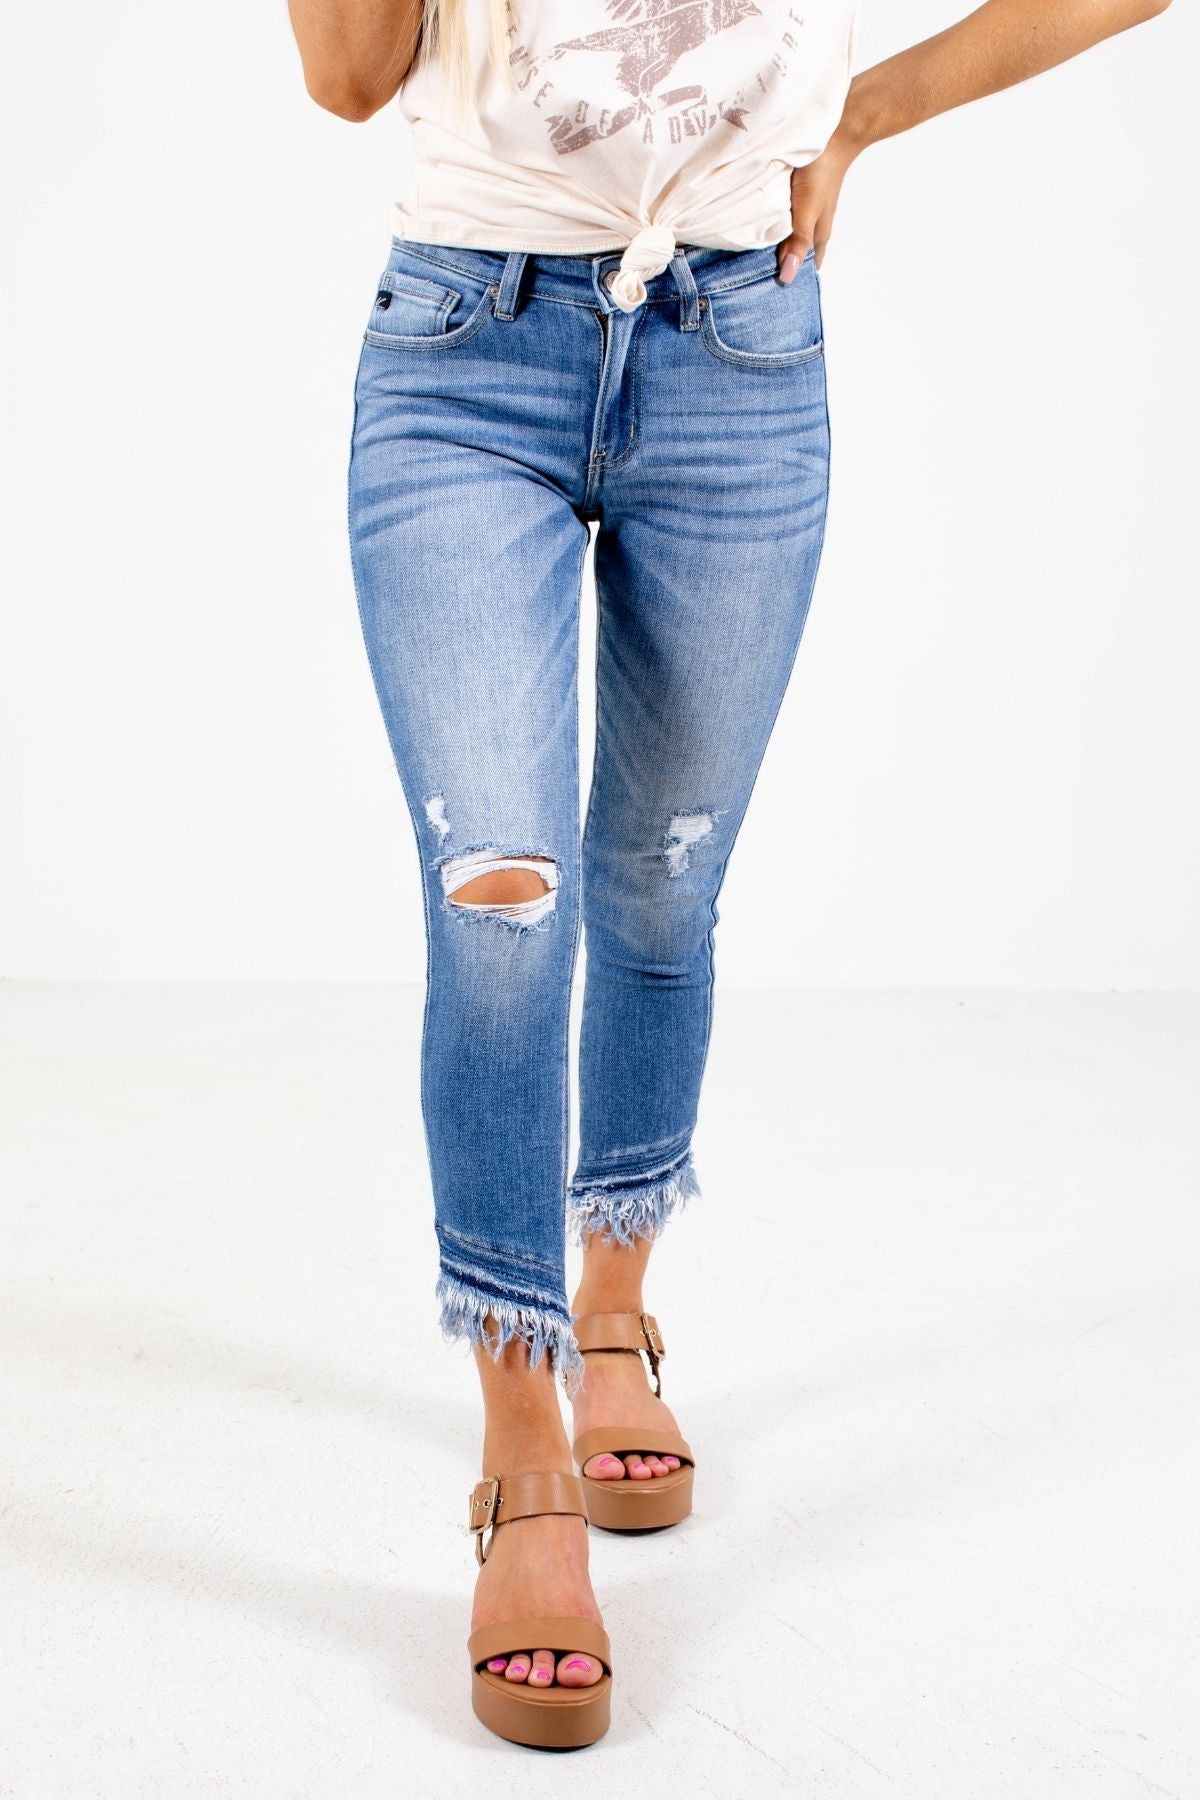 Women's Boutique KanCan Denim Jeans with Pockets